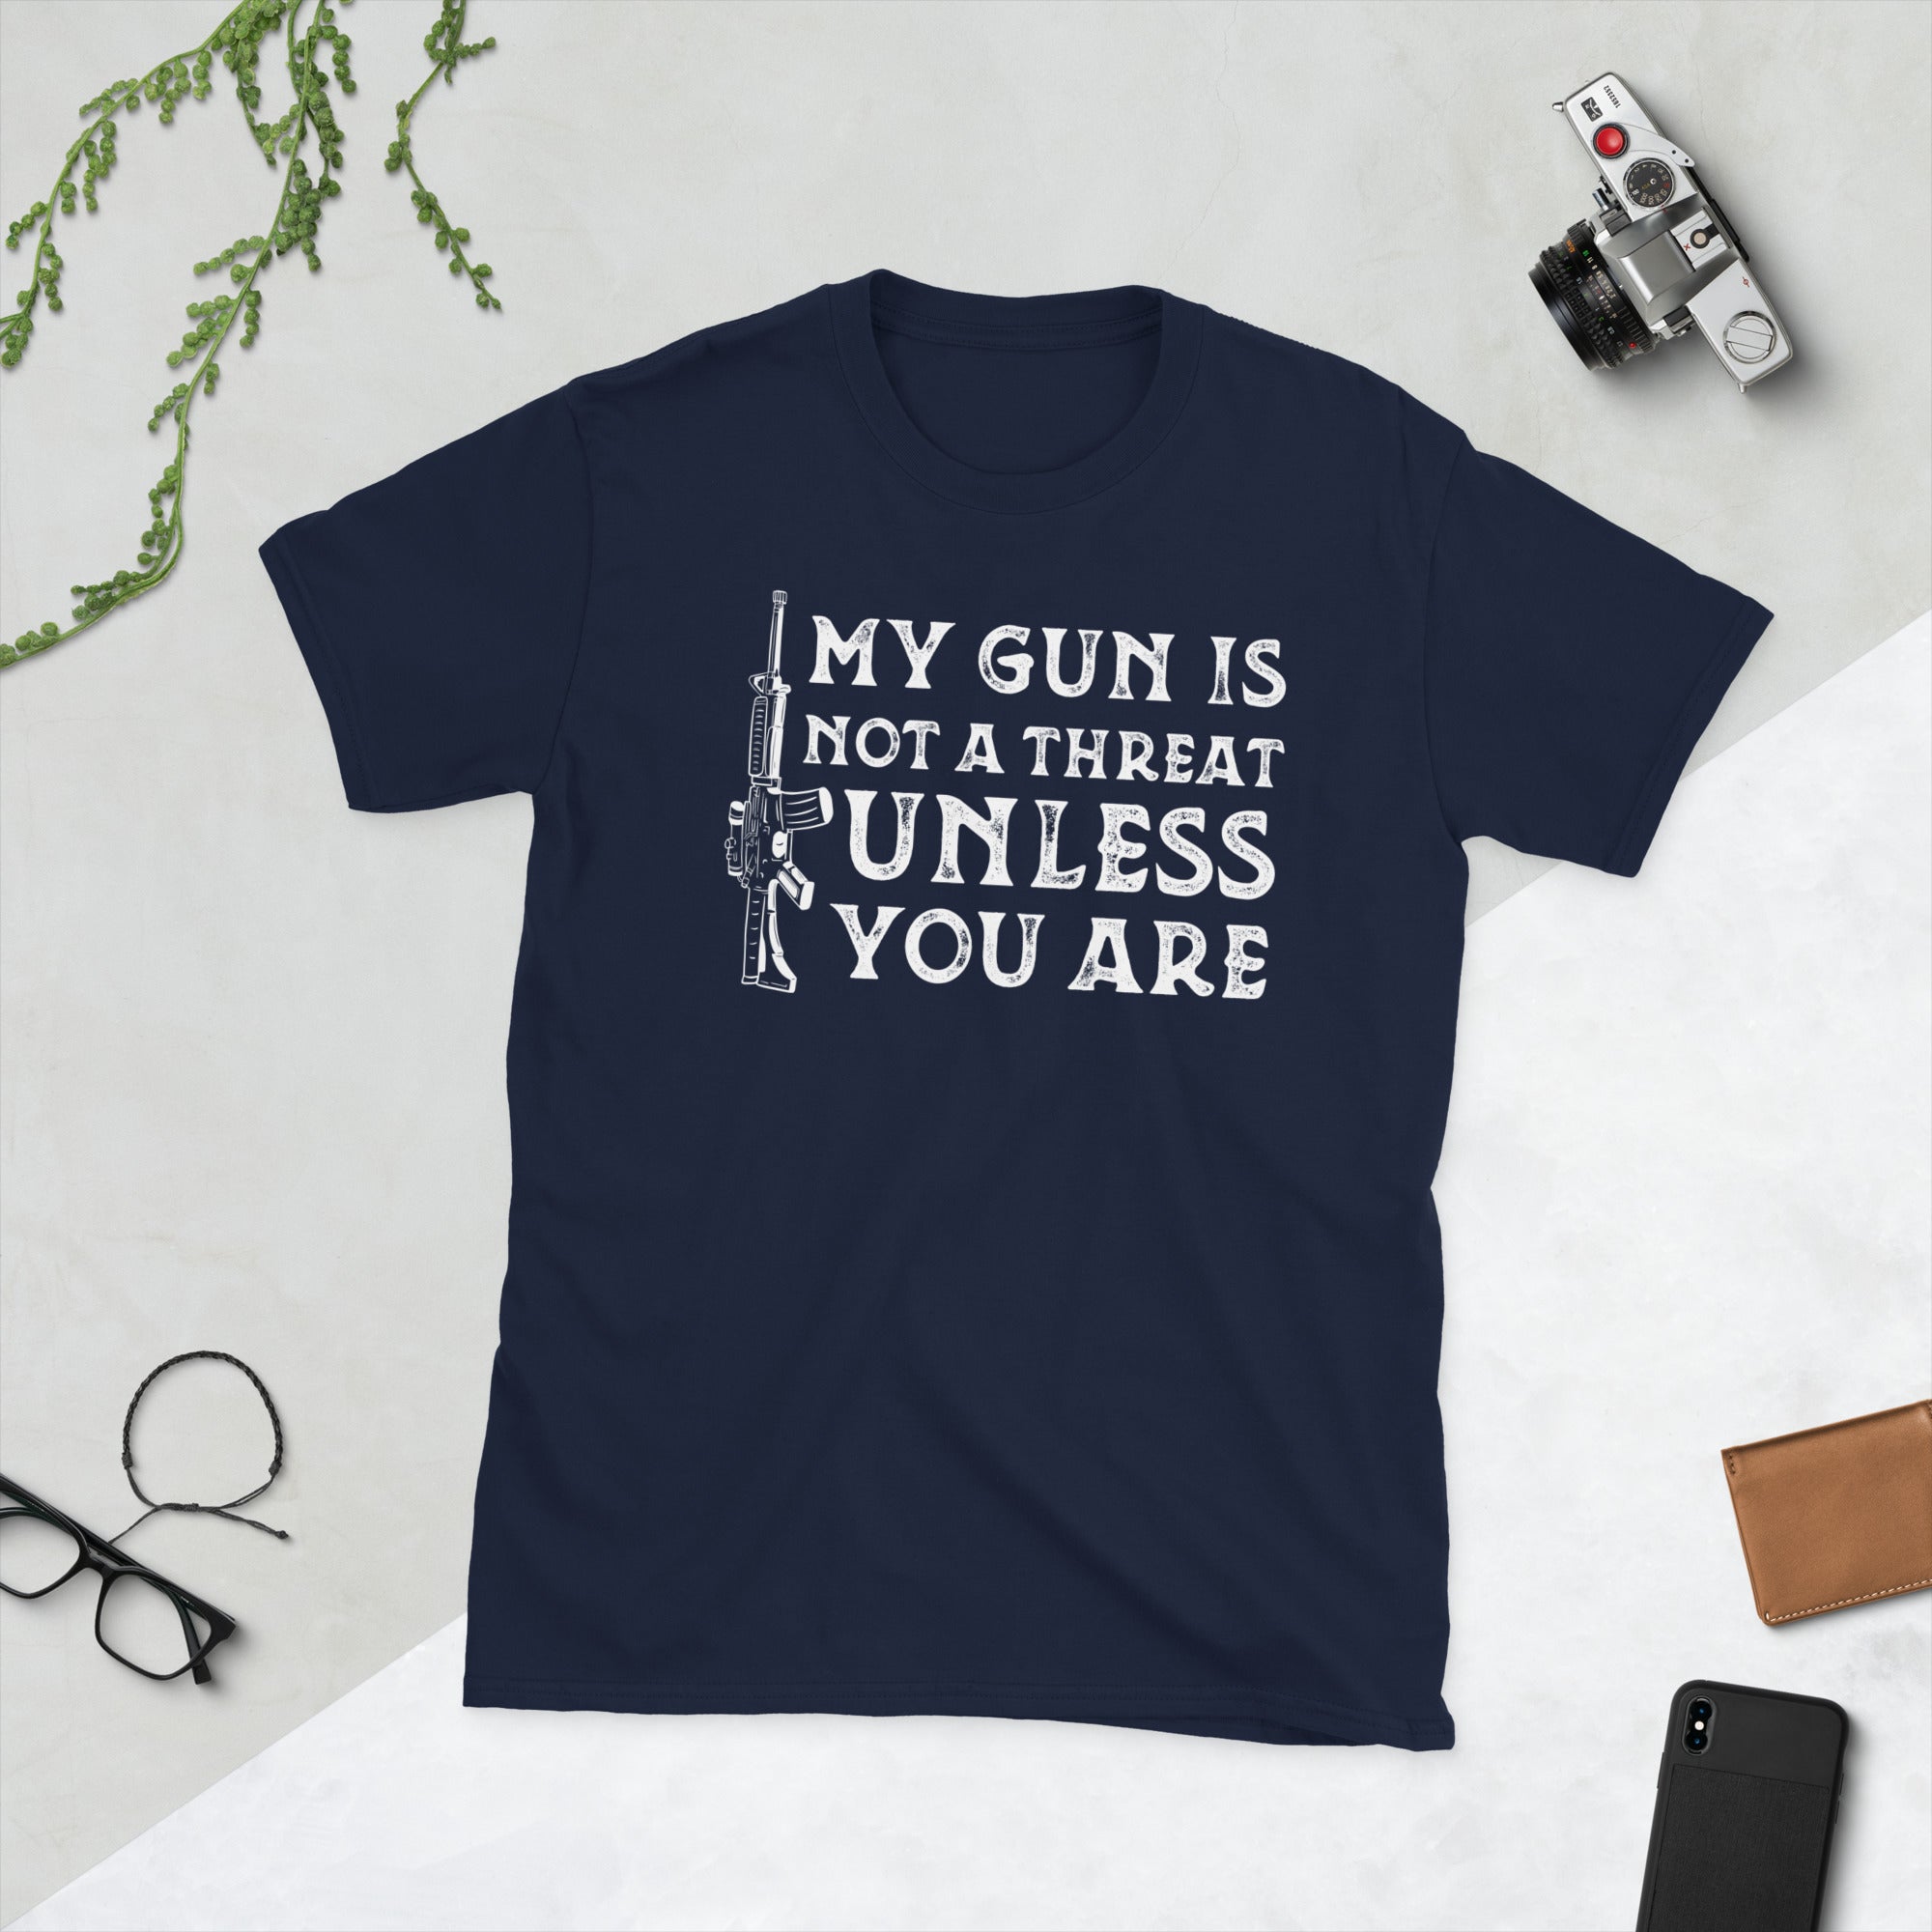 My Gun Is Not A Threat Unless You Are, Gun Rights AR-15 Shirt, 2nd Amendment Tshirt, Republican Shirts, Funny Guns Tee, 4th Of July Gifts